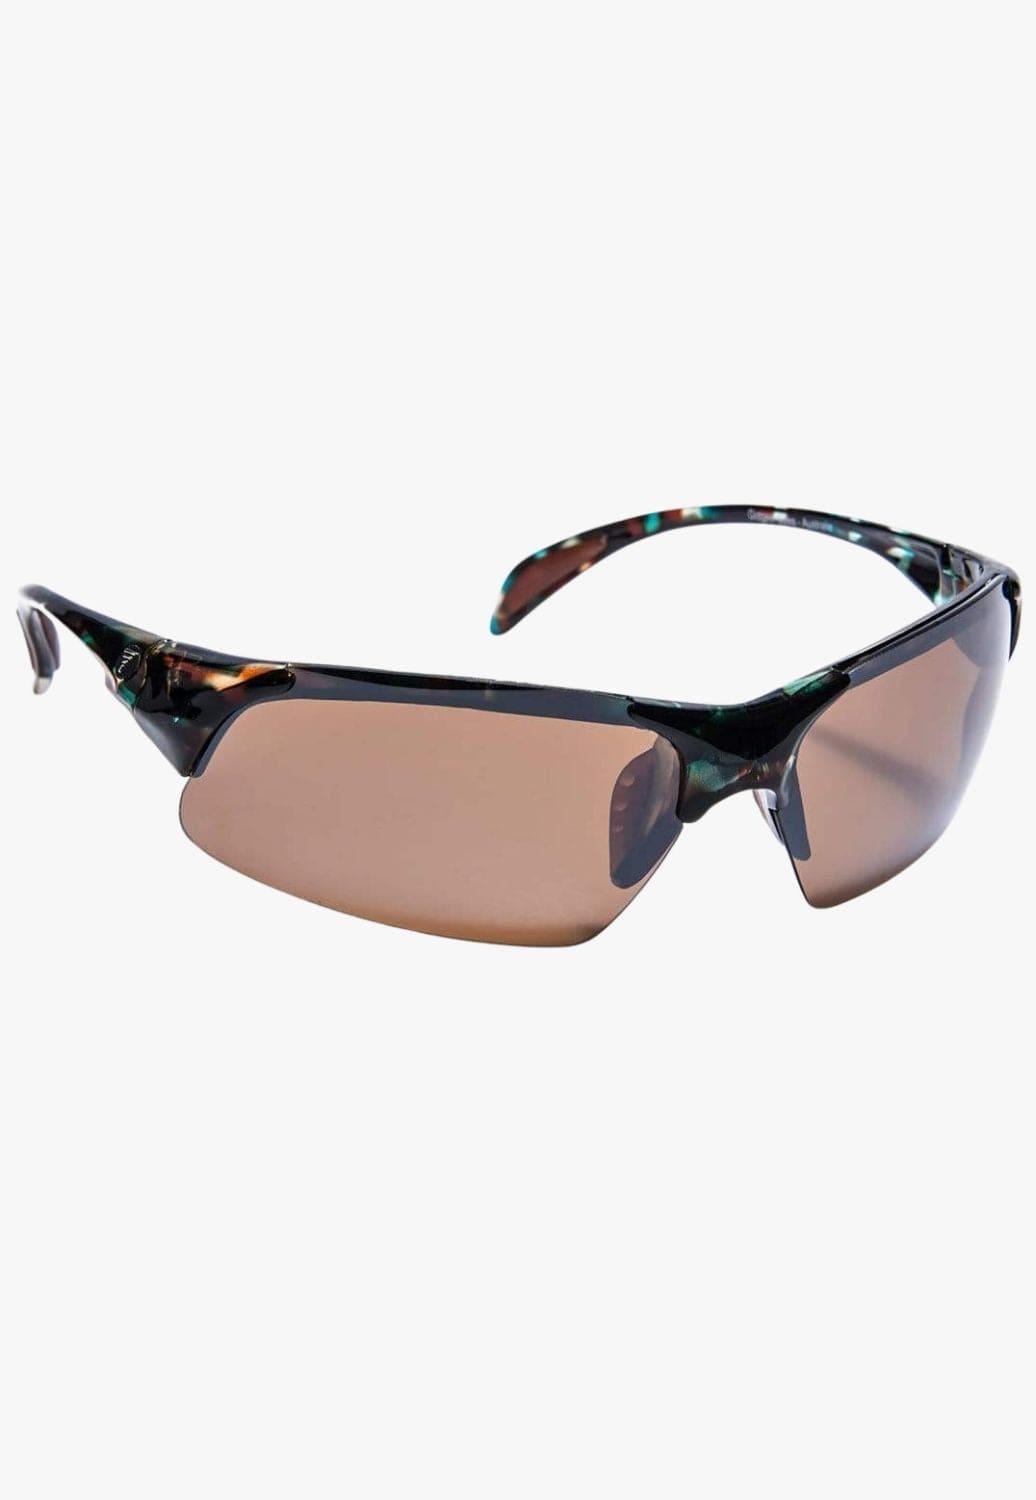 Gidgee Eyes ACCESSORIES-Sunglasses OSFA / Tortoise Gidgee Eyes Cleancut Sunglasses